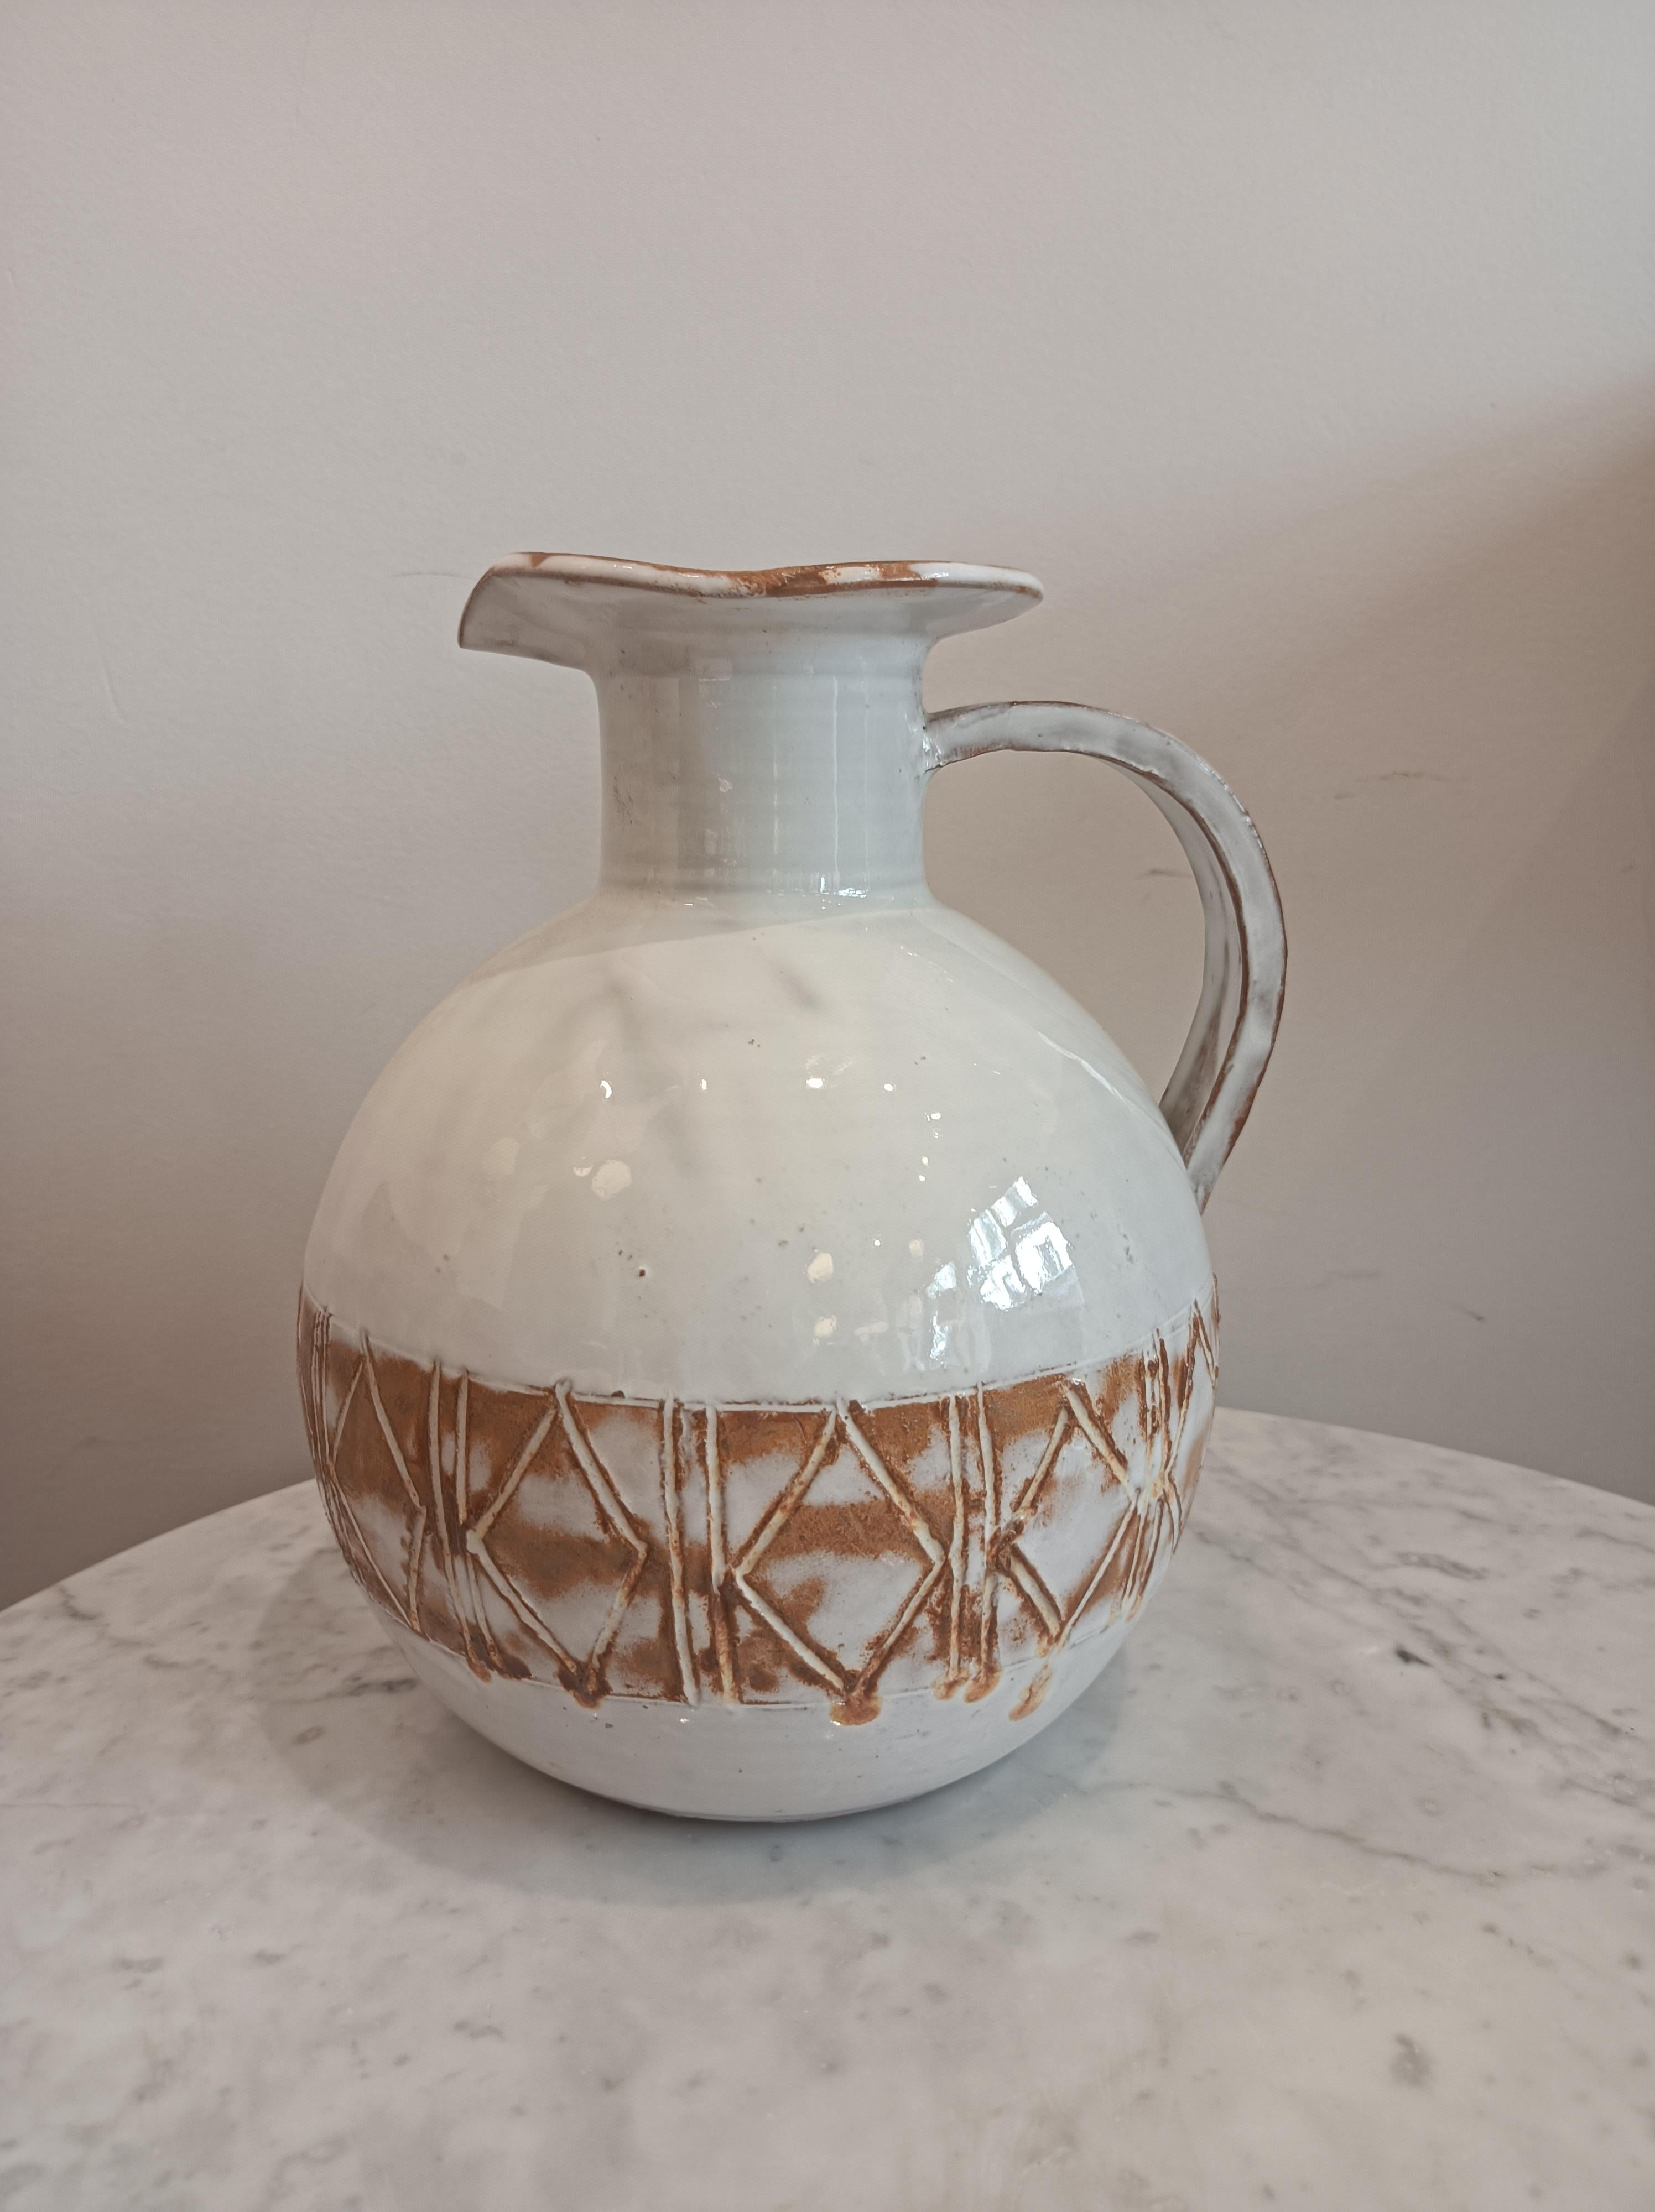 Stoneware pitcher by L'atelier les argonautes. 
Off-white glaze with geometric decorations. 
Signed 